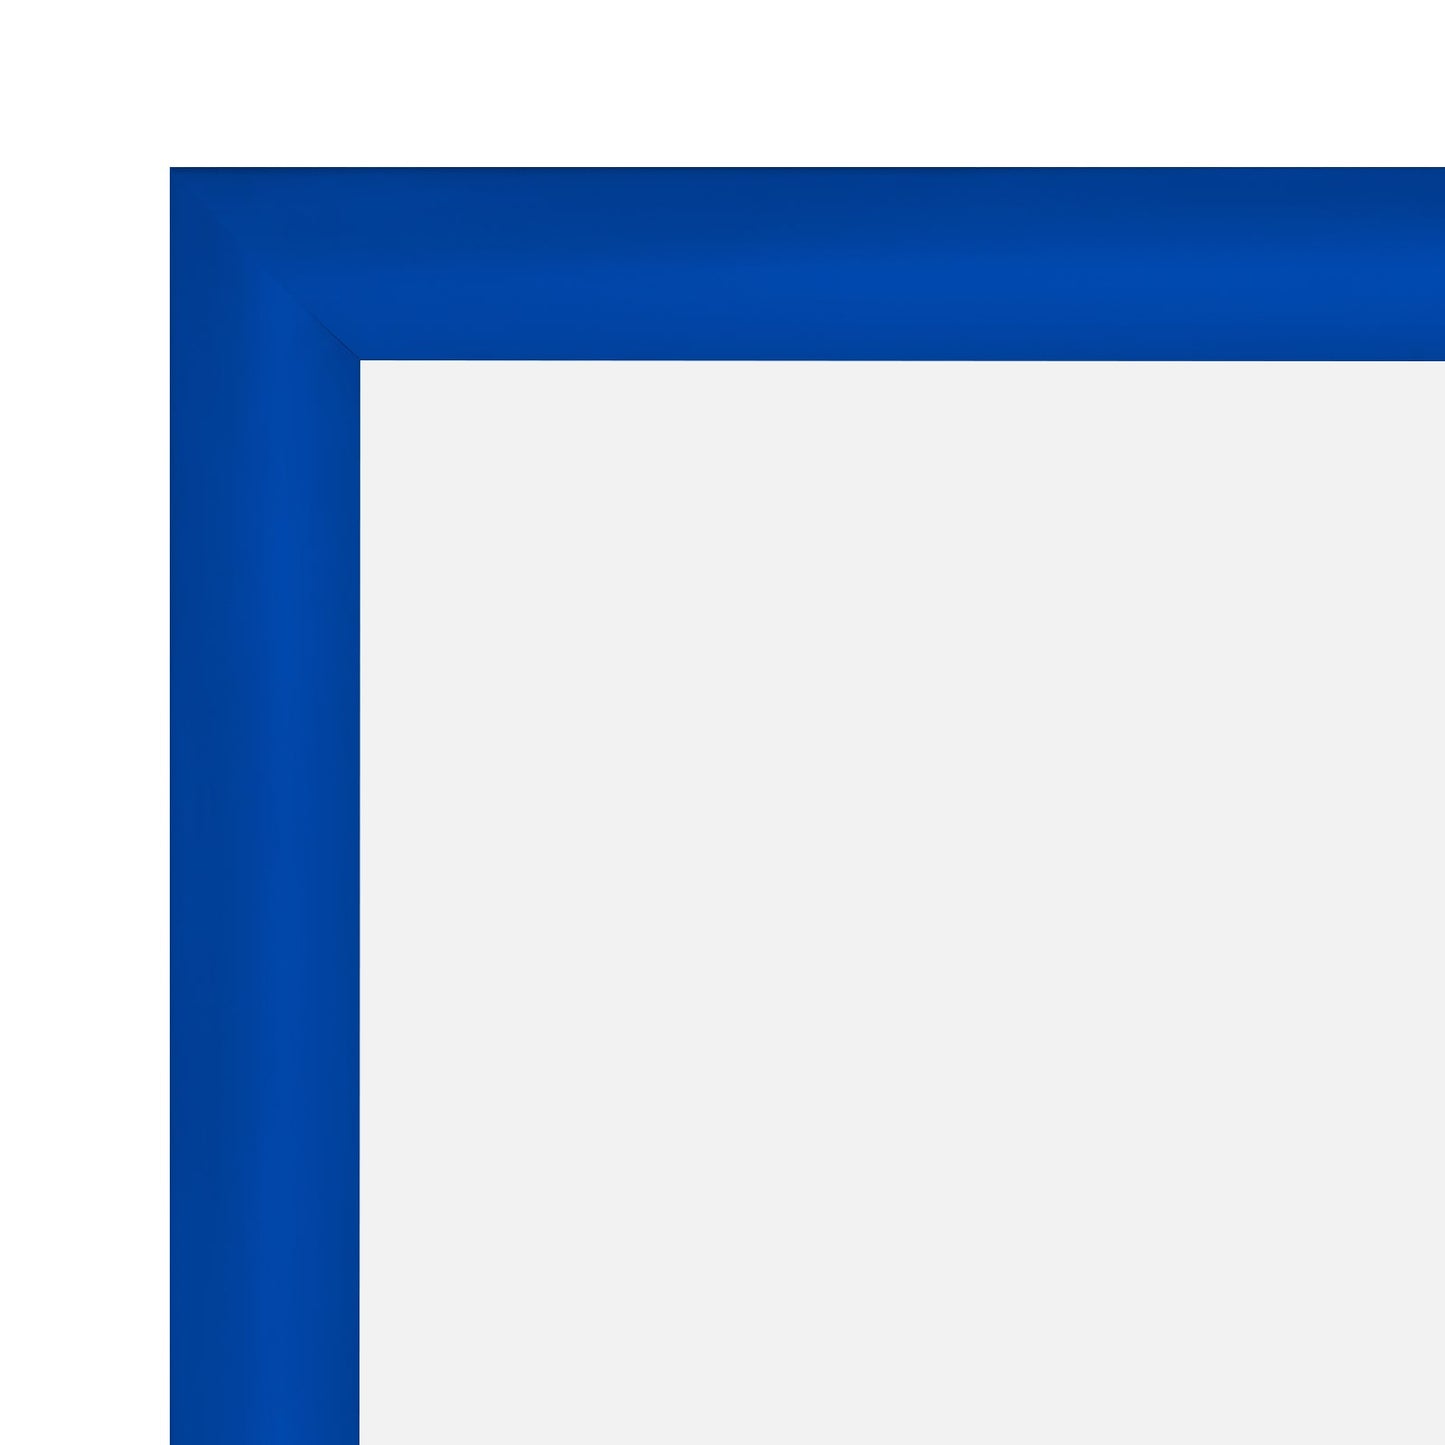 11x17 Blue SnapeZo® Snap Frame - 1.2" Profile